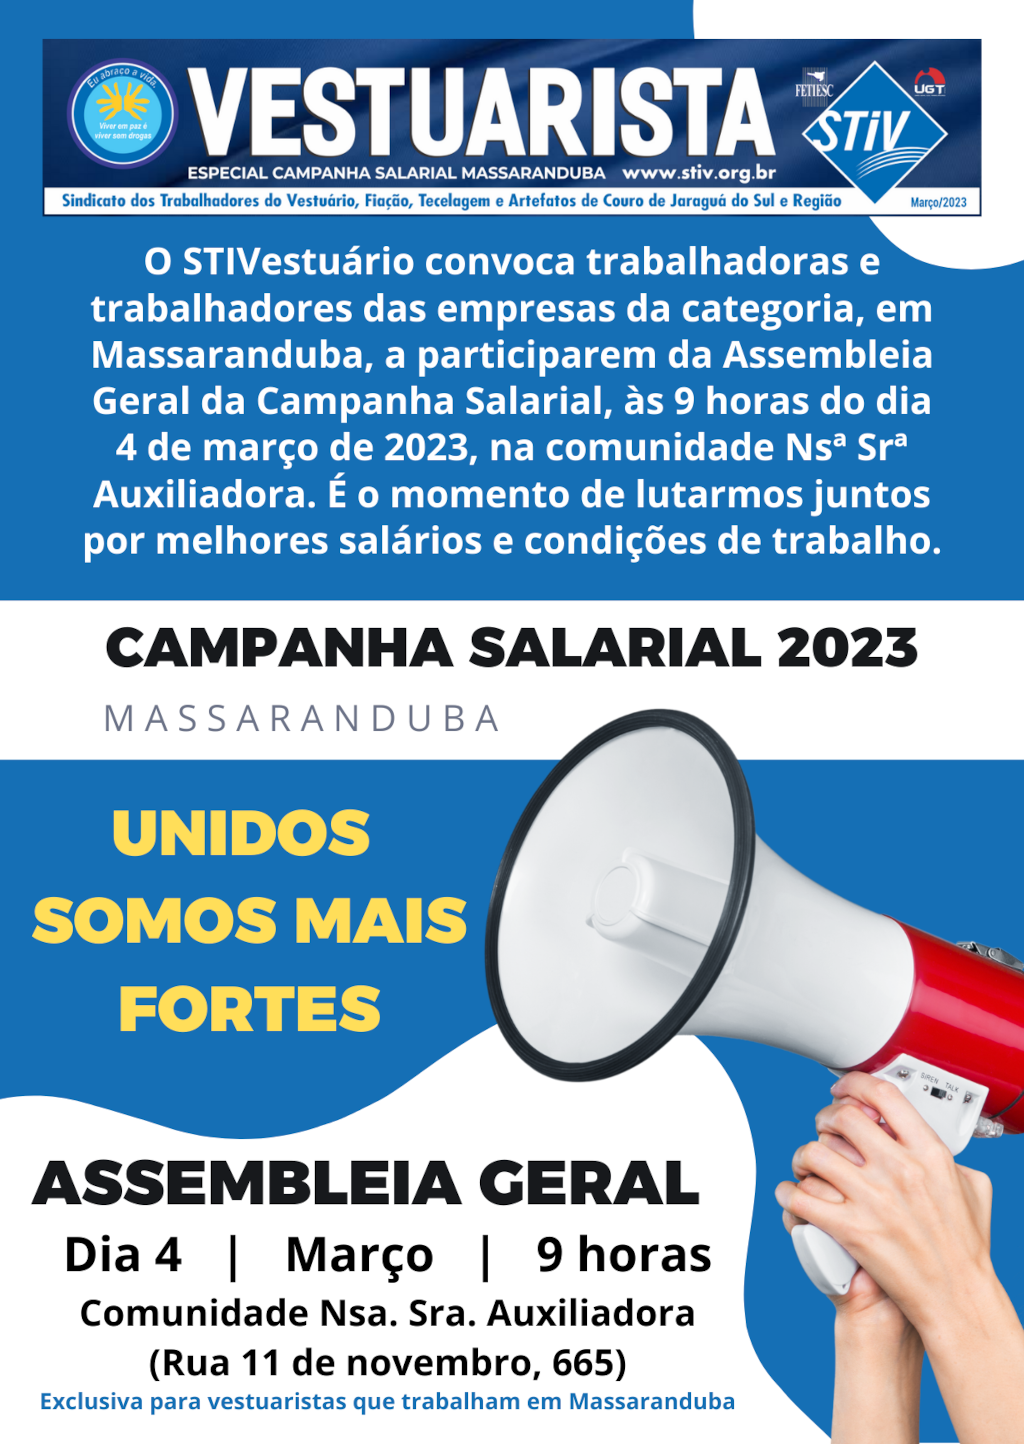 Campanha salarial 2023 – Massaranduba